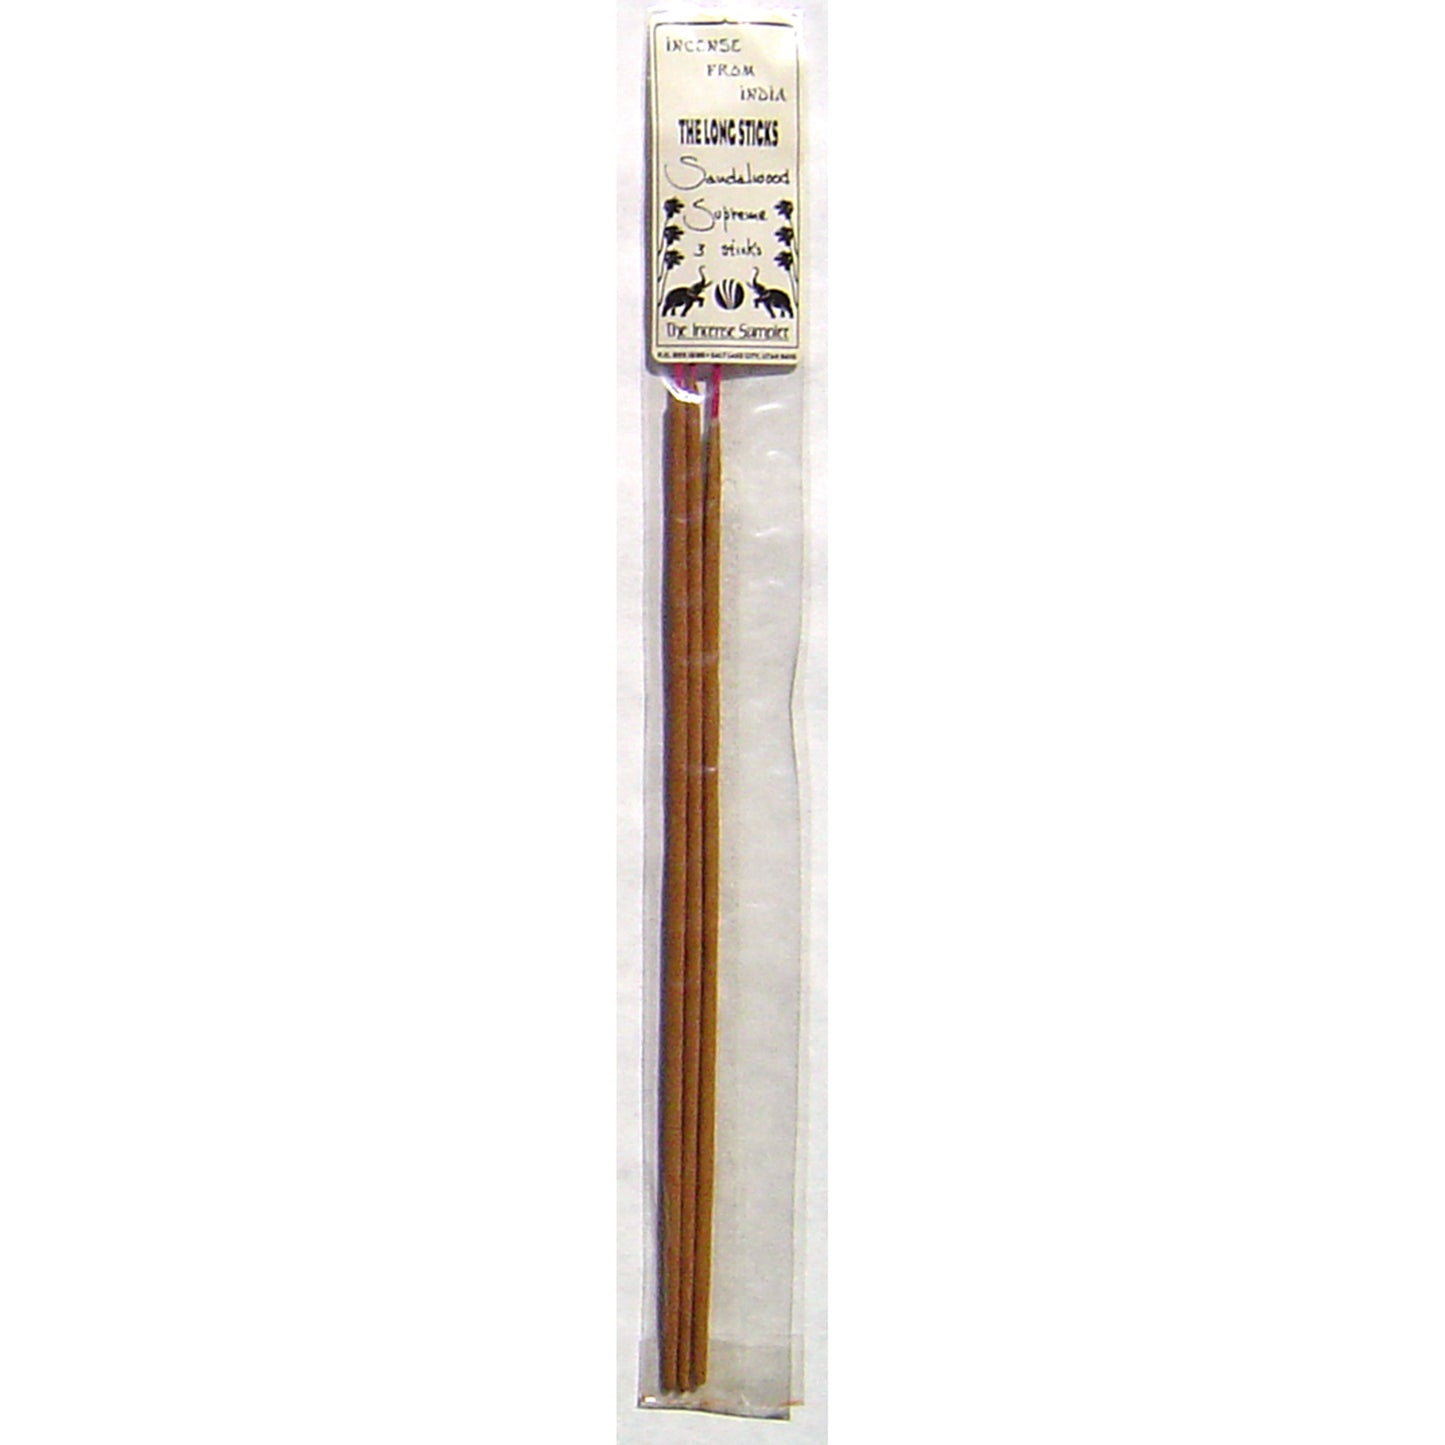 Incense From India - Sandalwood Supreme, 15" Garden Sticks